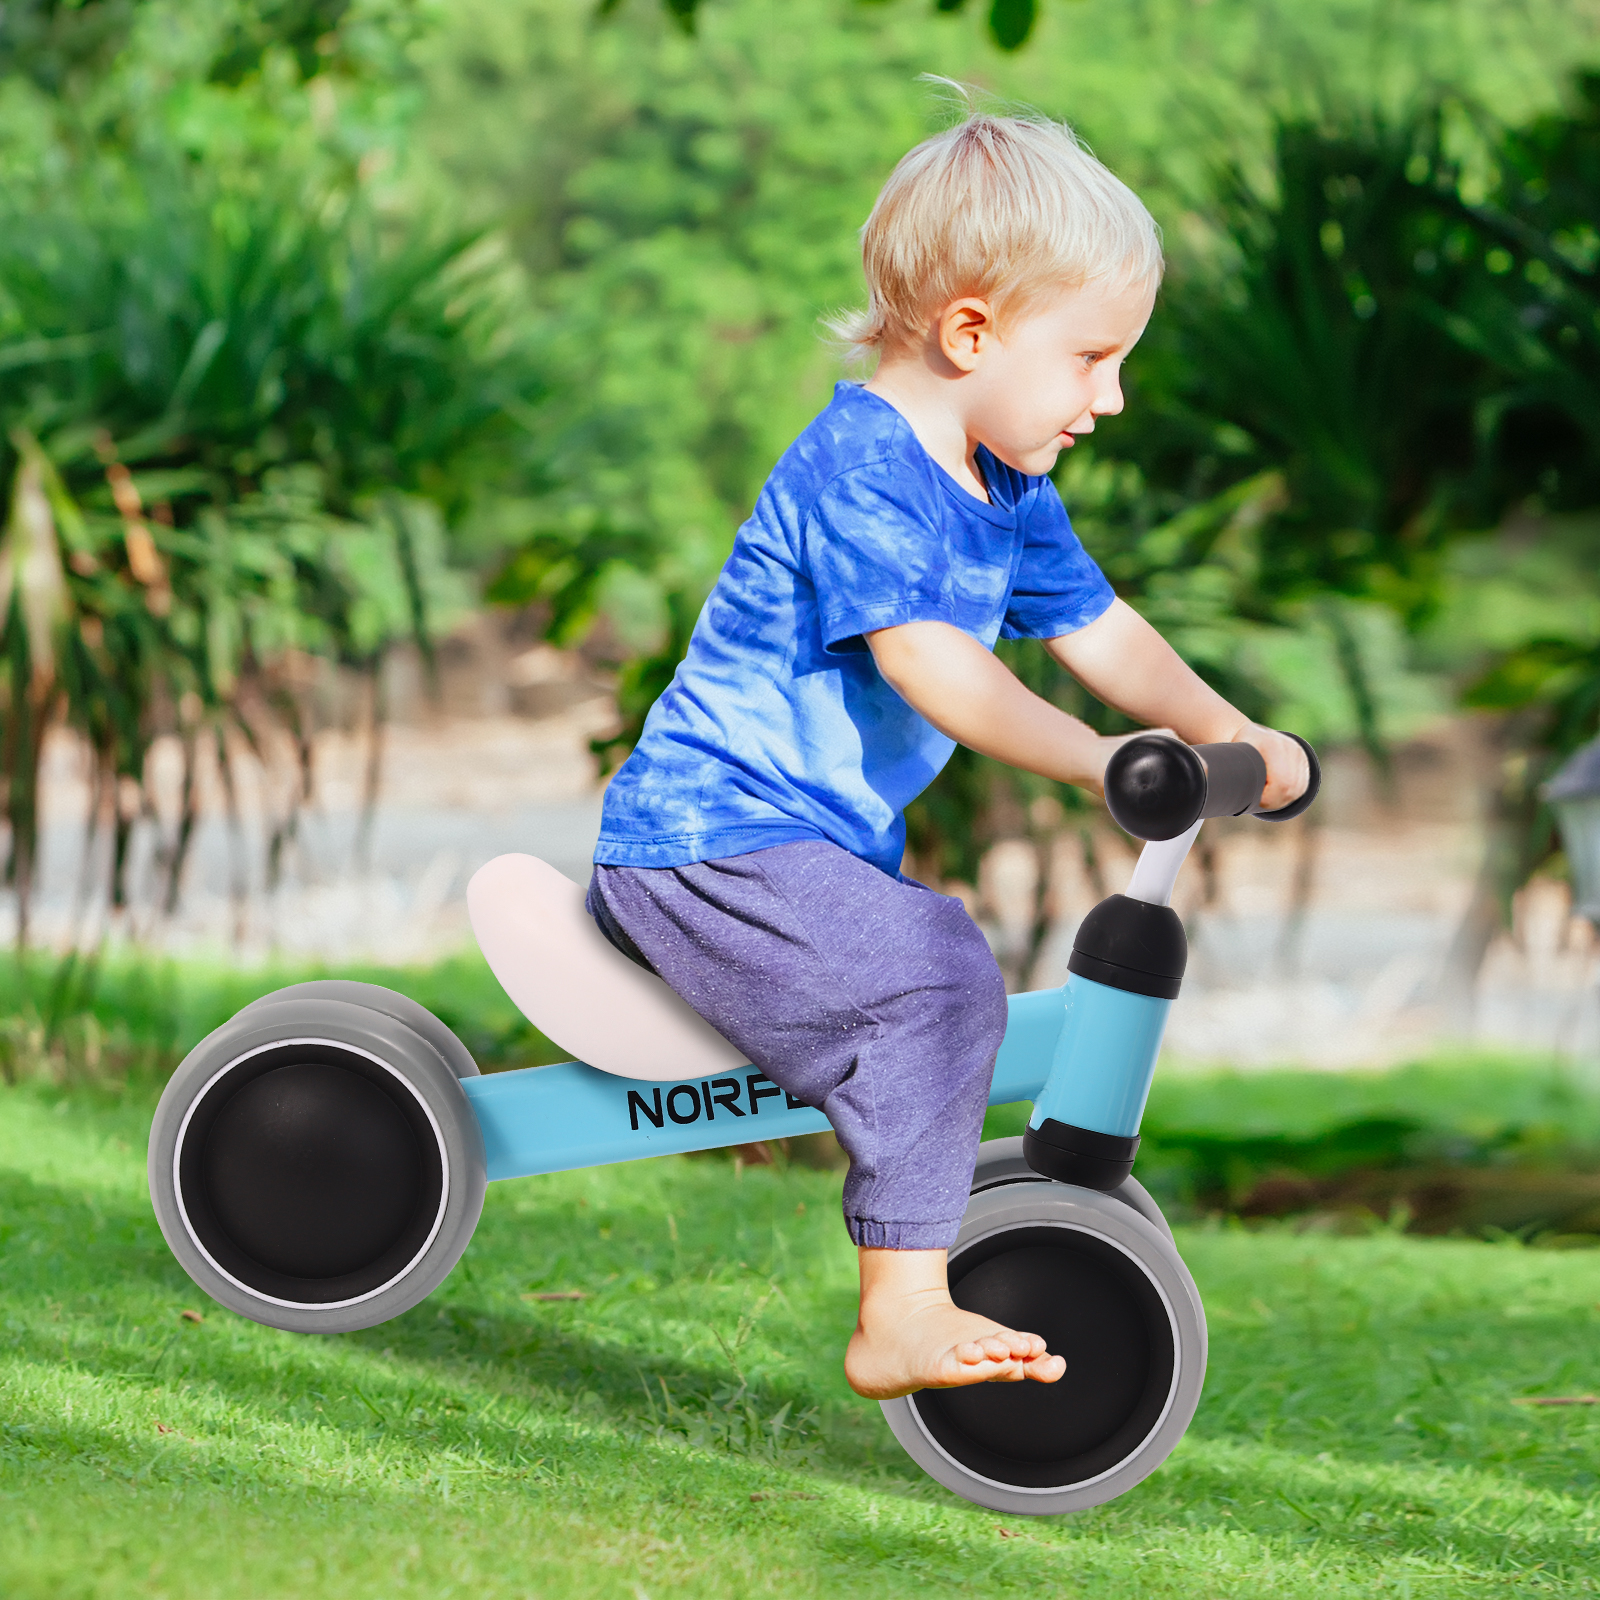 Norflx Kids Balance Bike Ride On Toy Baby Push Bike - BLUE